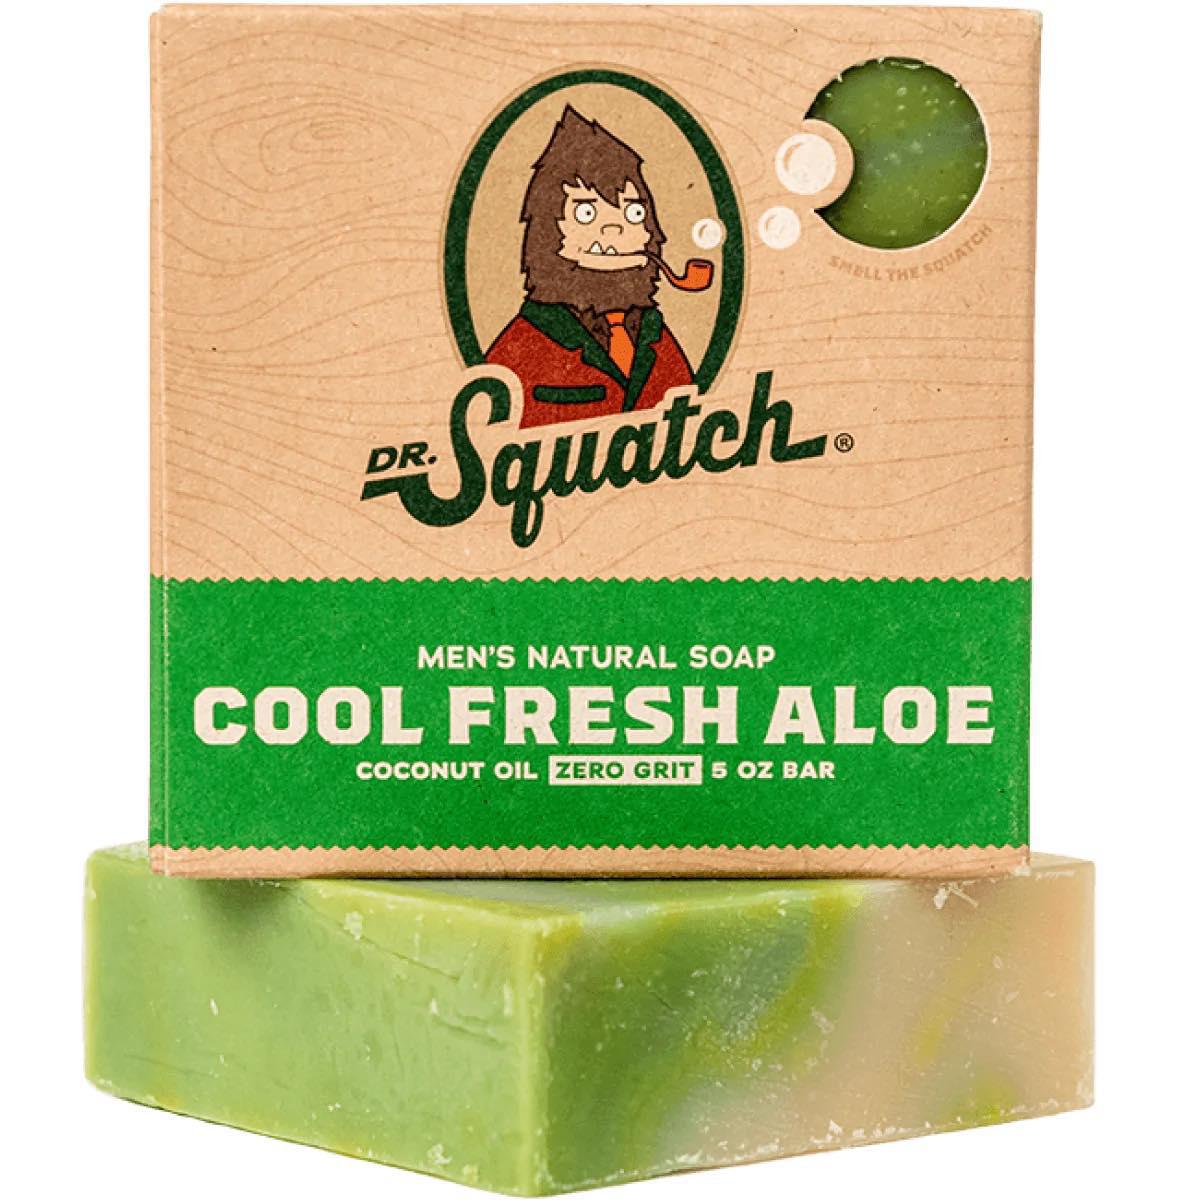 Cool Fresh Aloe Dr. Squatch Bar Soap